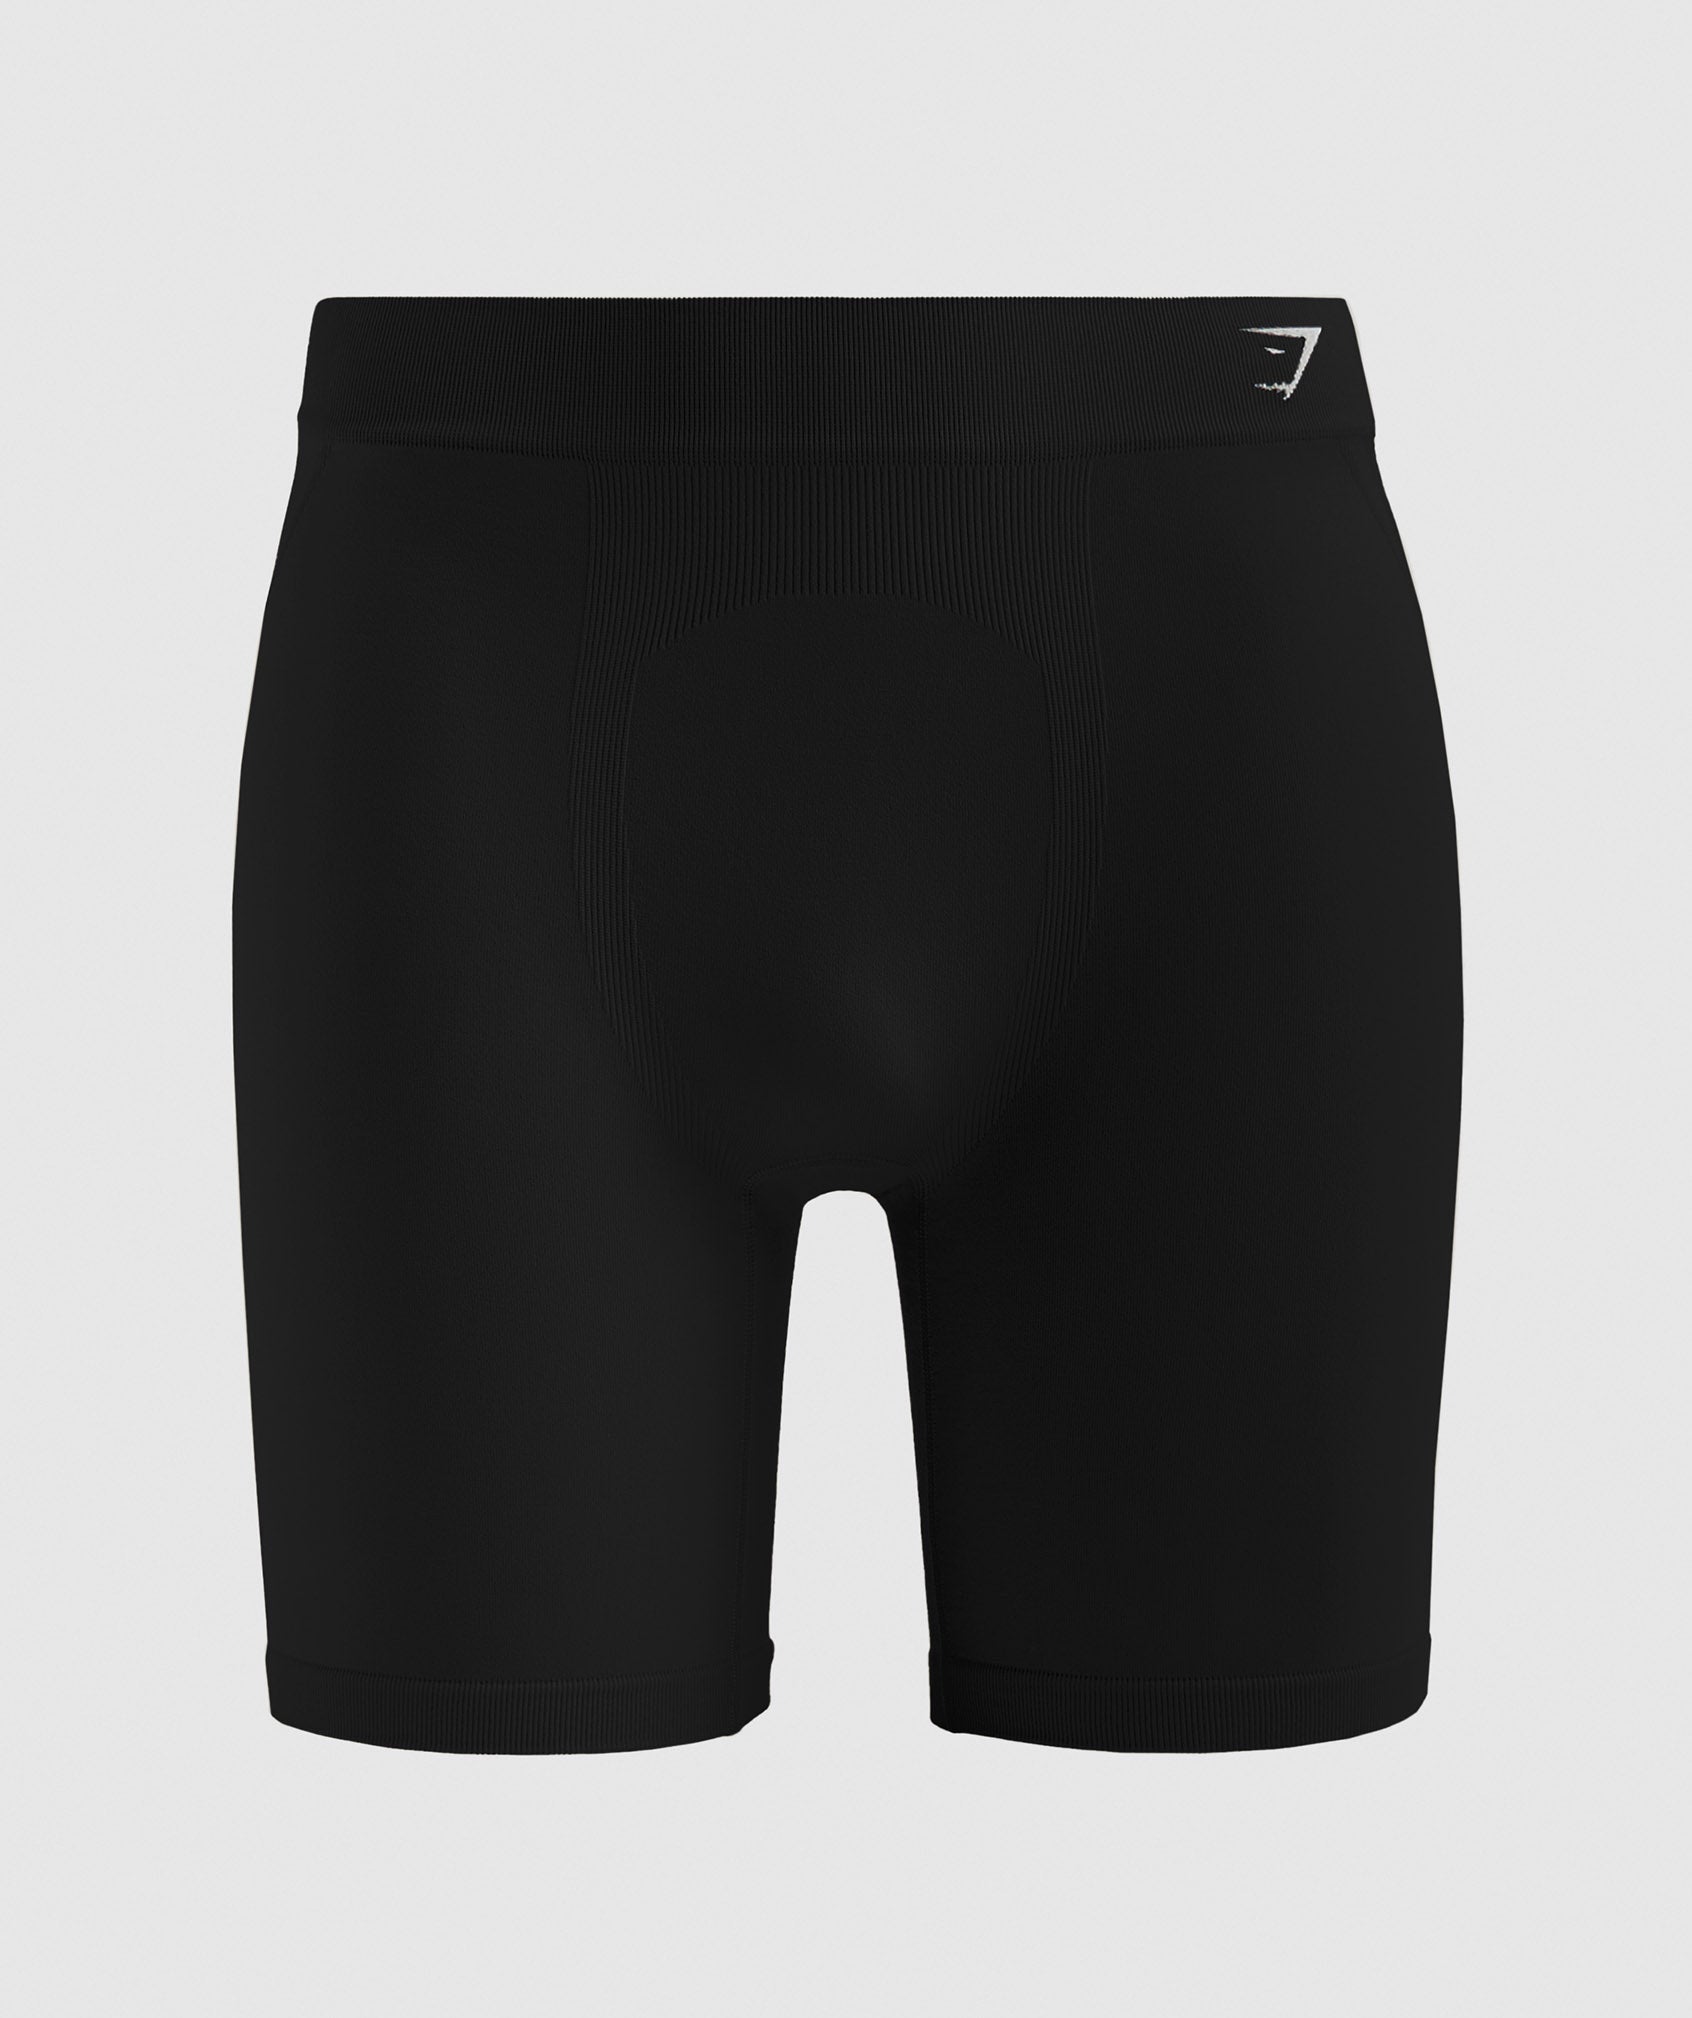 Gap Underwear Mens 1 Pr Graphic Boxer S M L XL XXL XXXL New